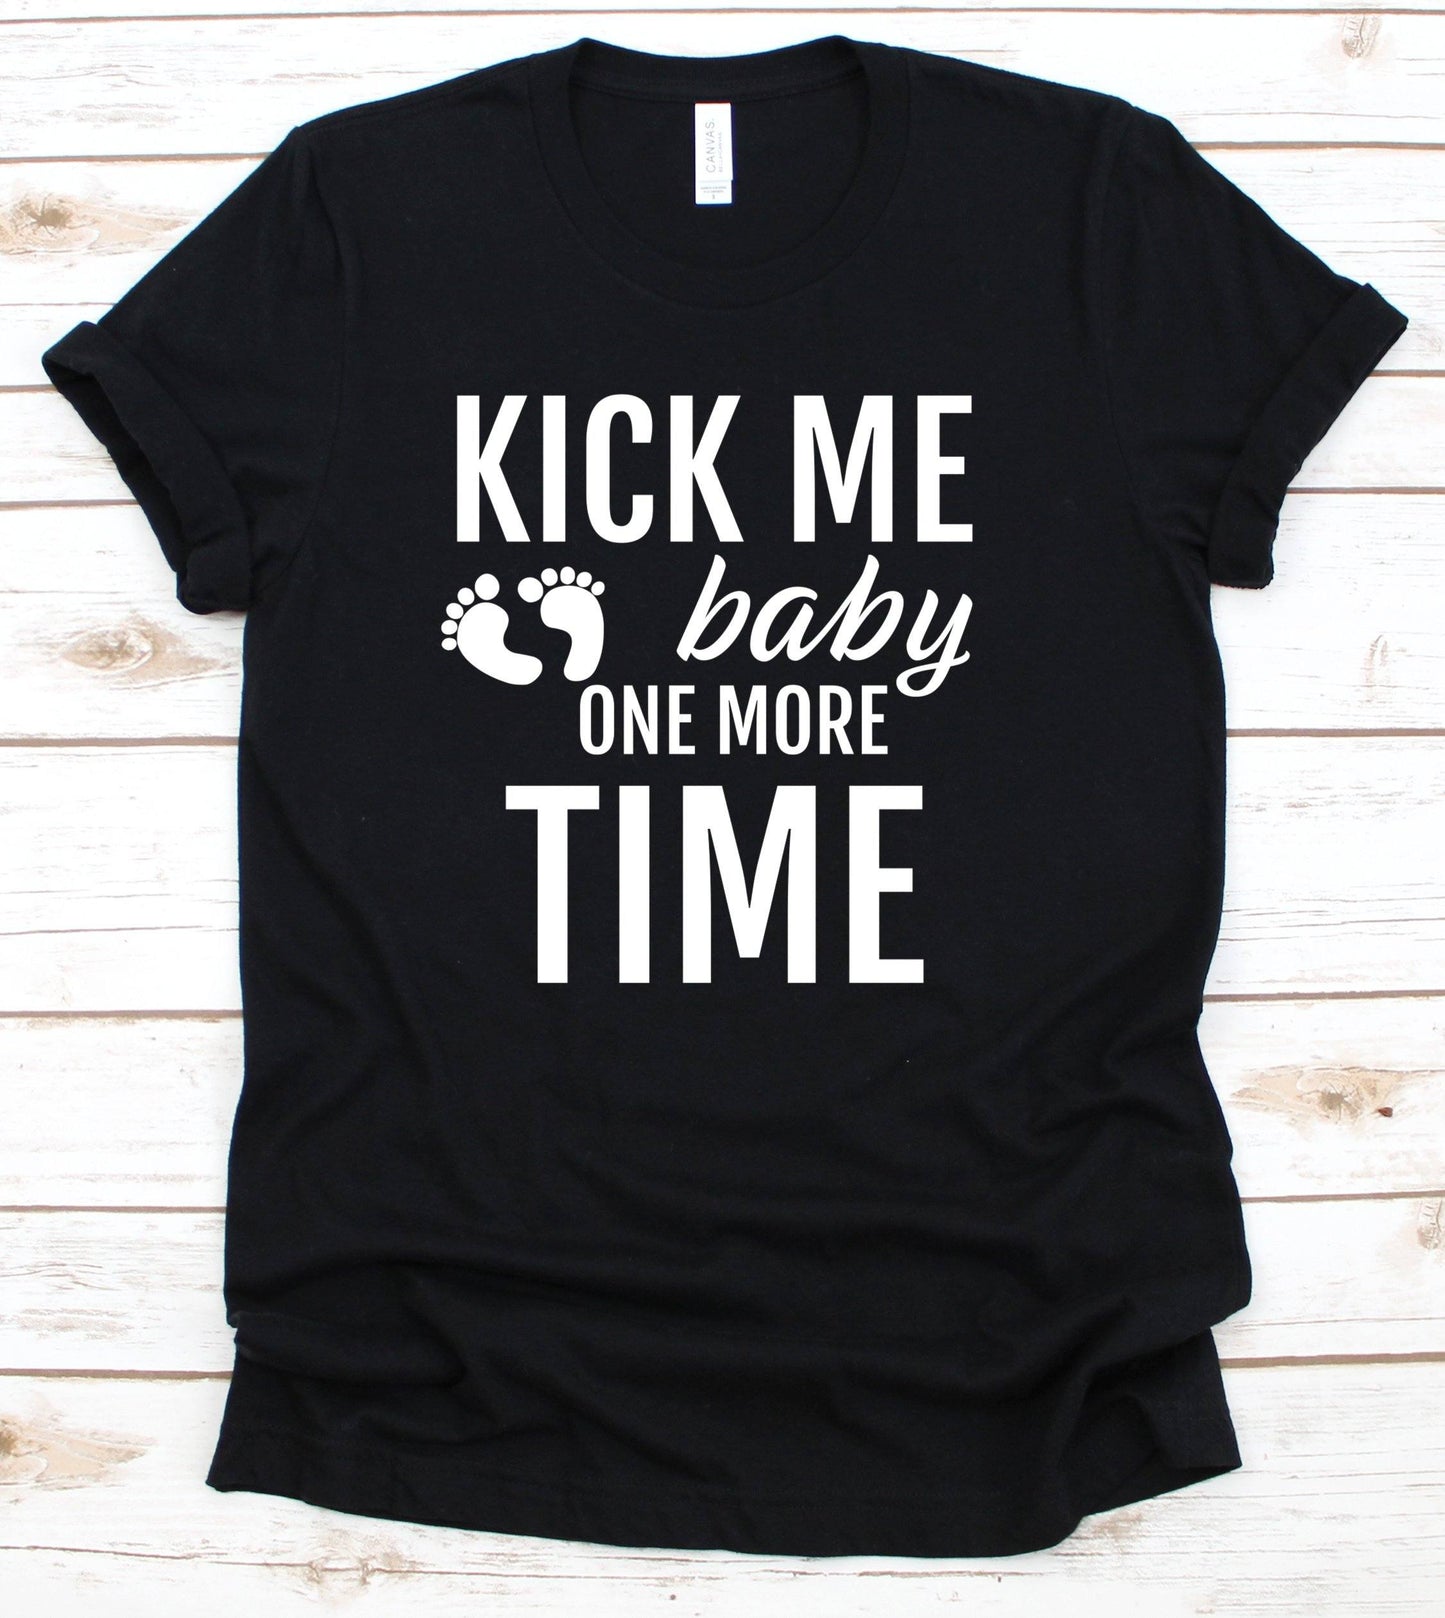 Kick Me Baby One More Time